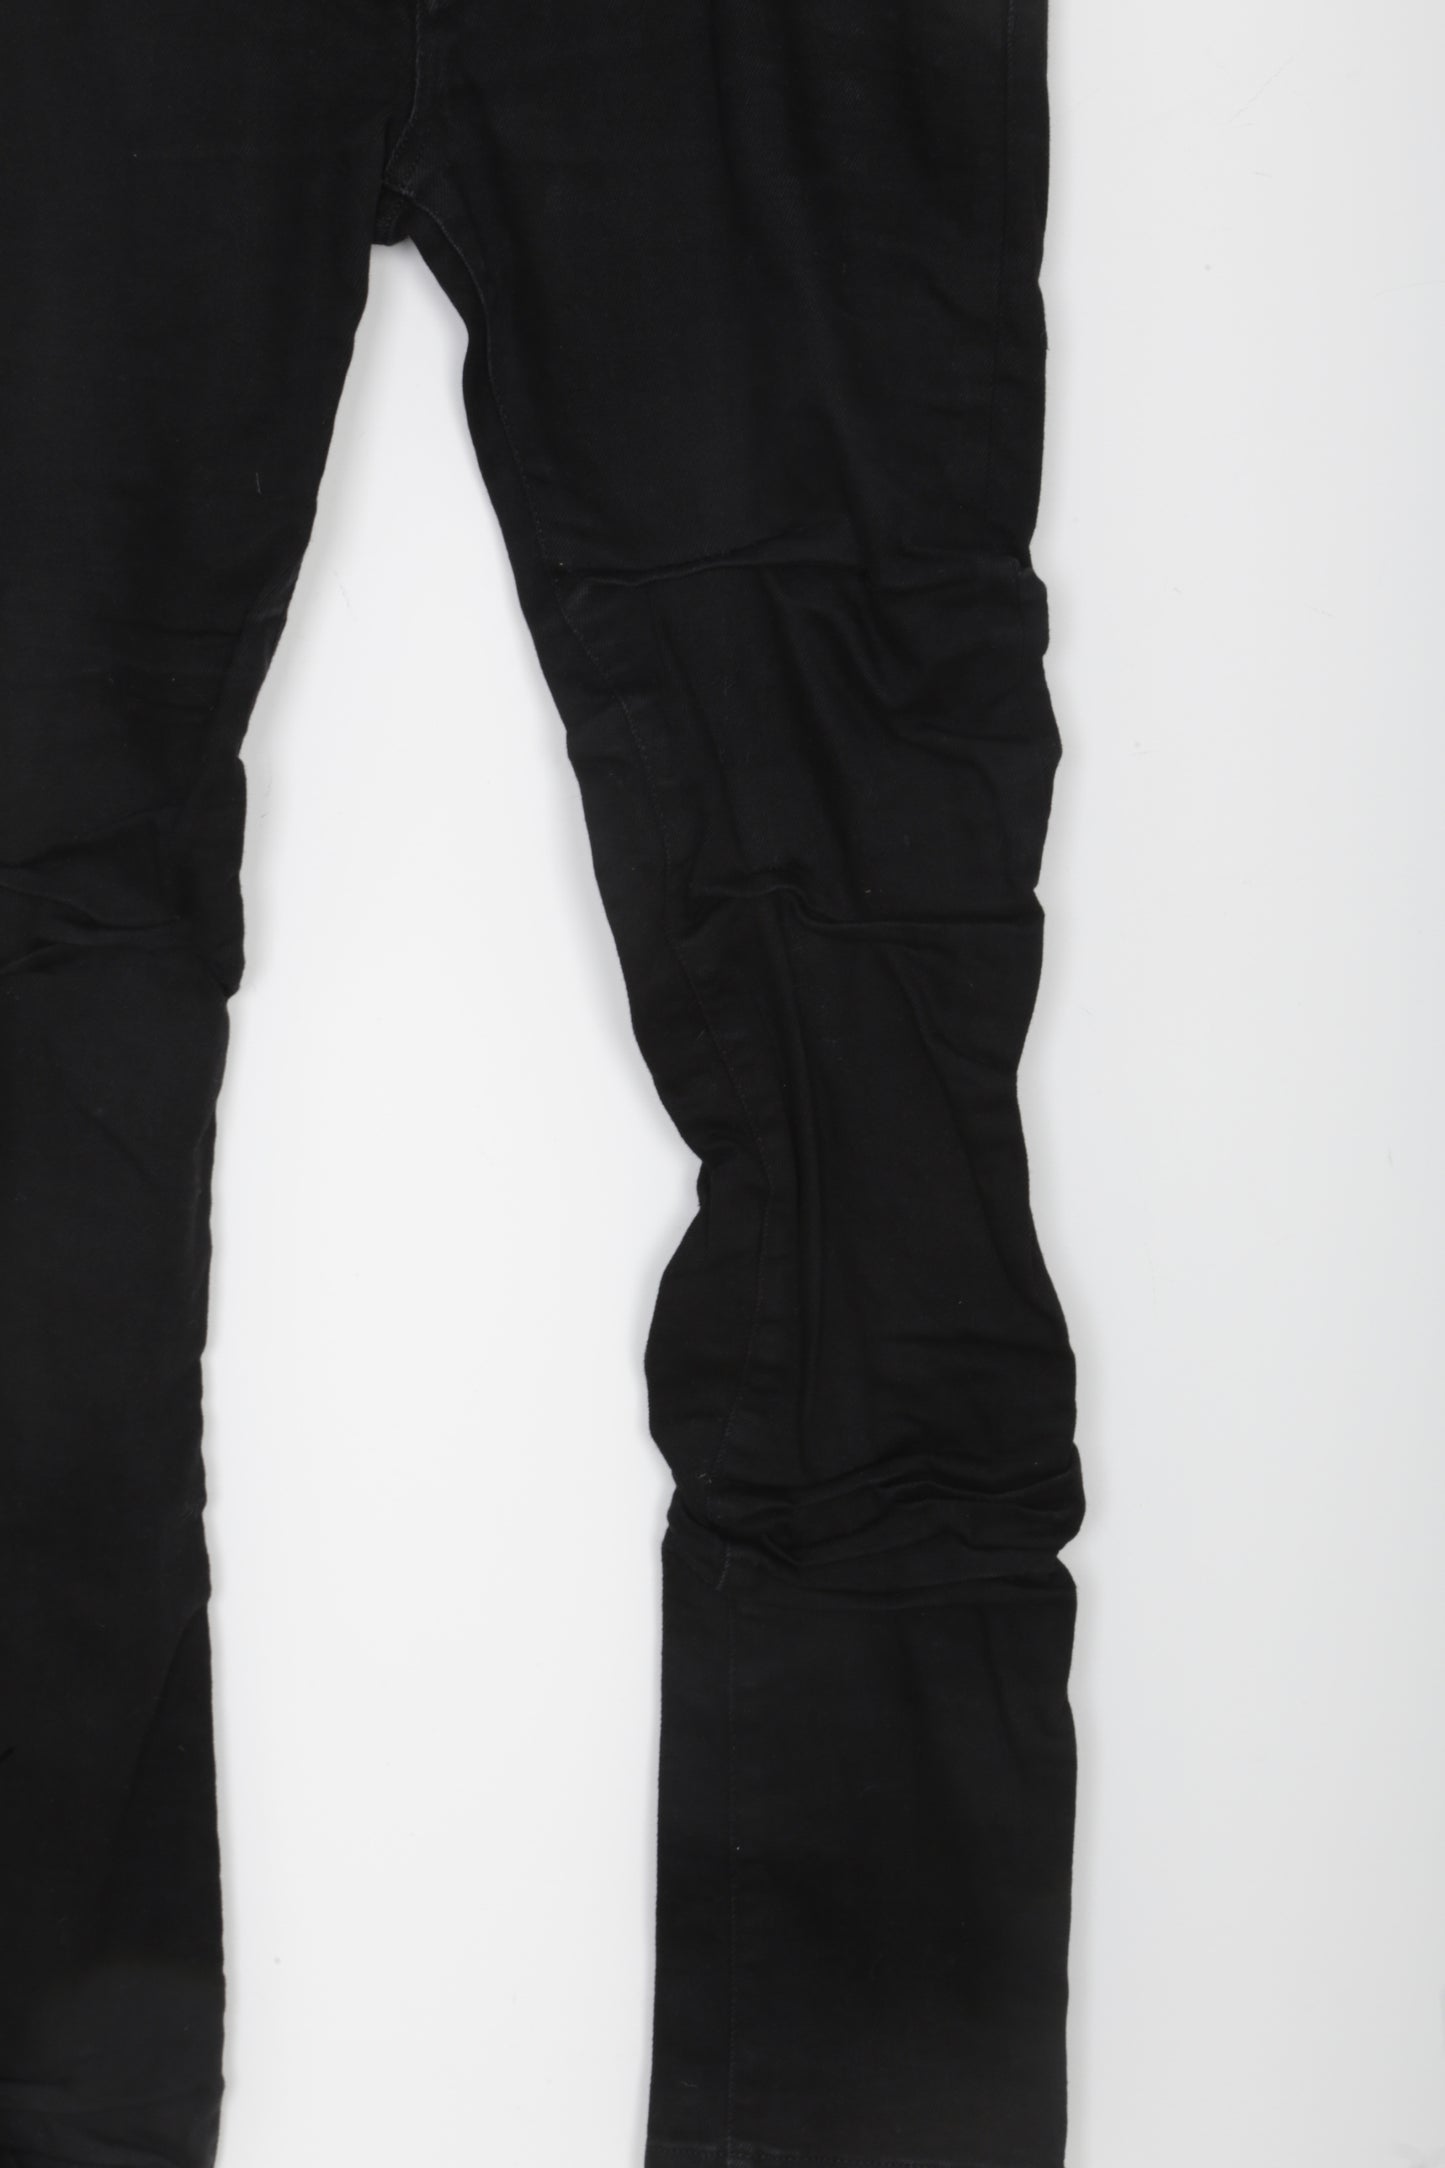 Maison Margiela Unisex Black Jeans Size 34